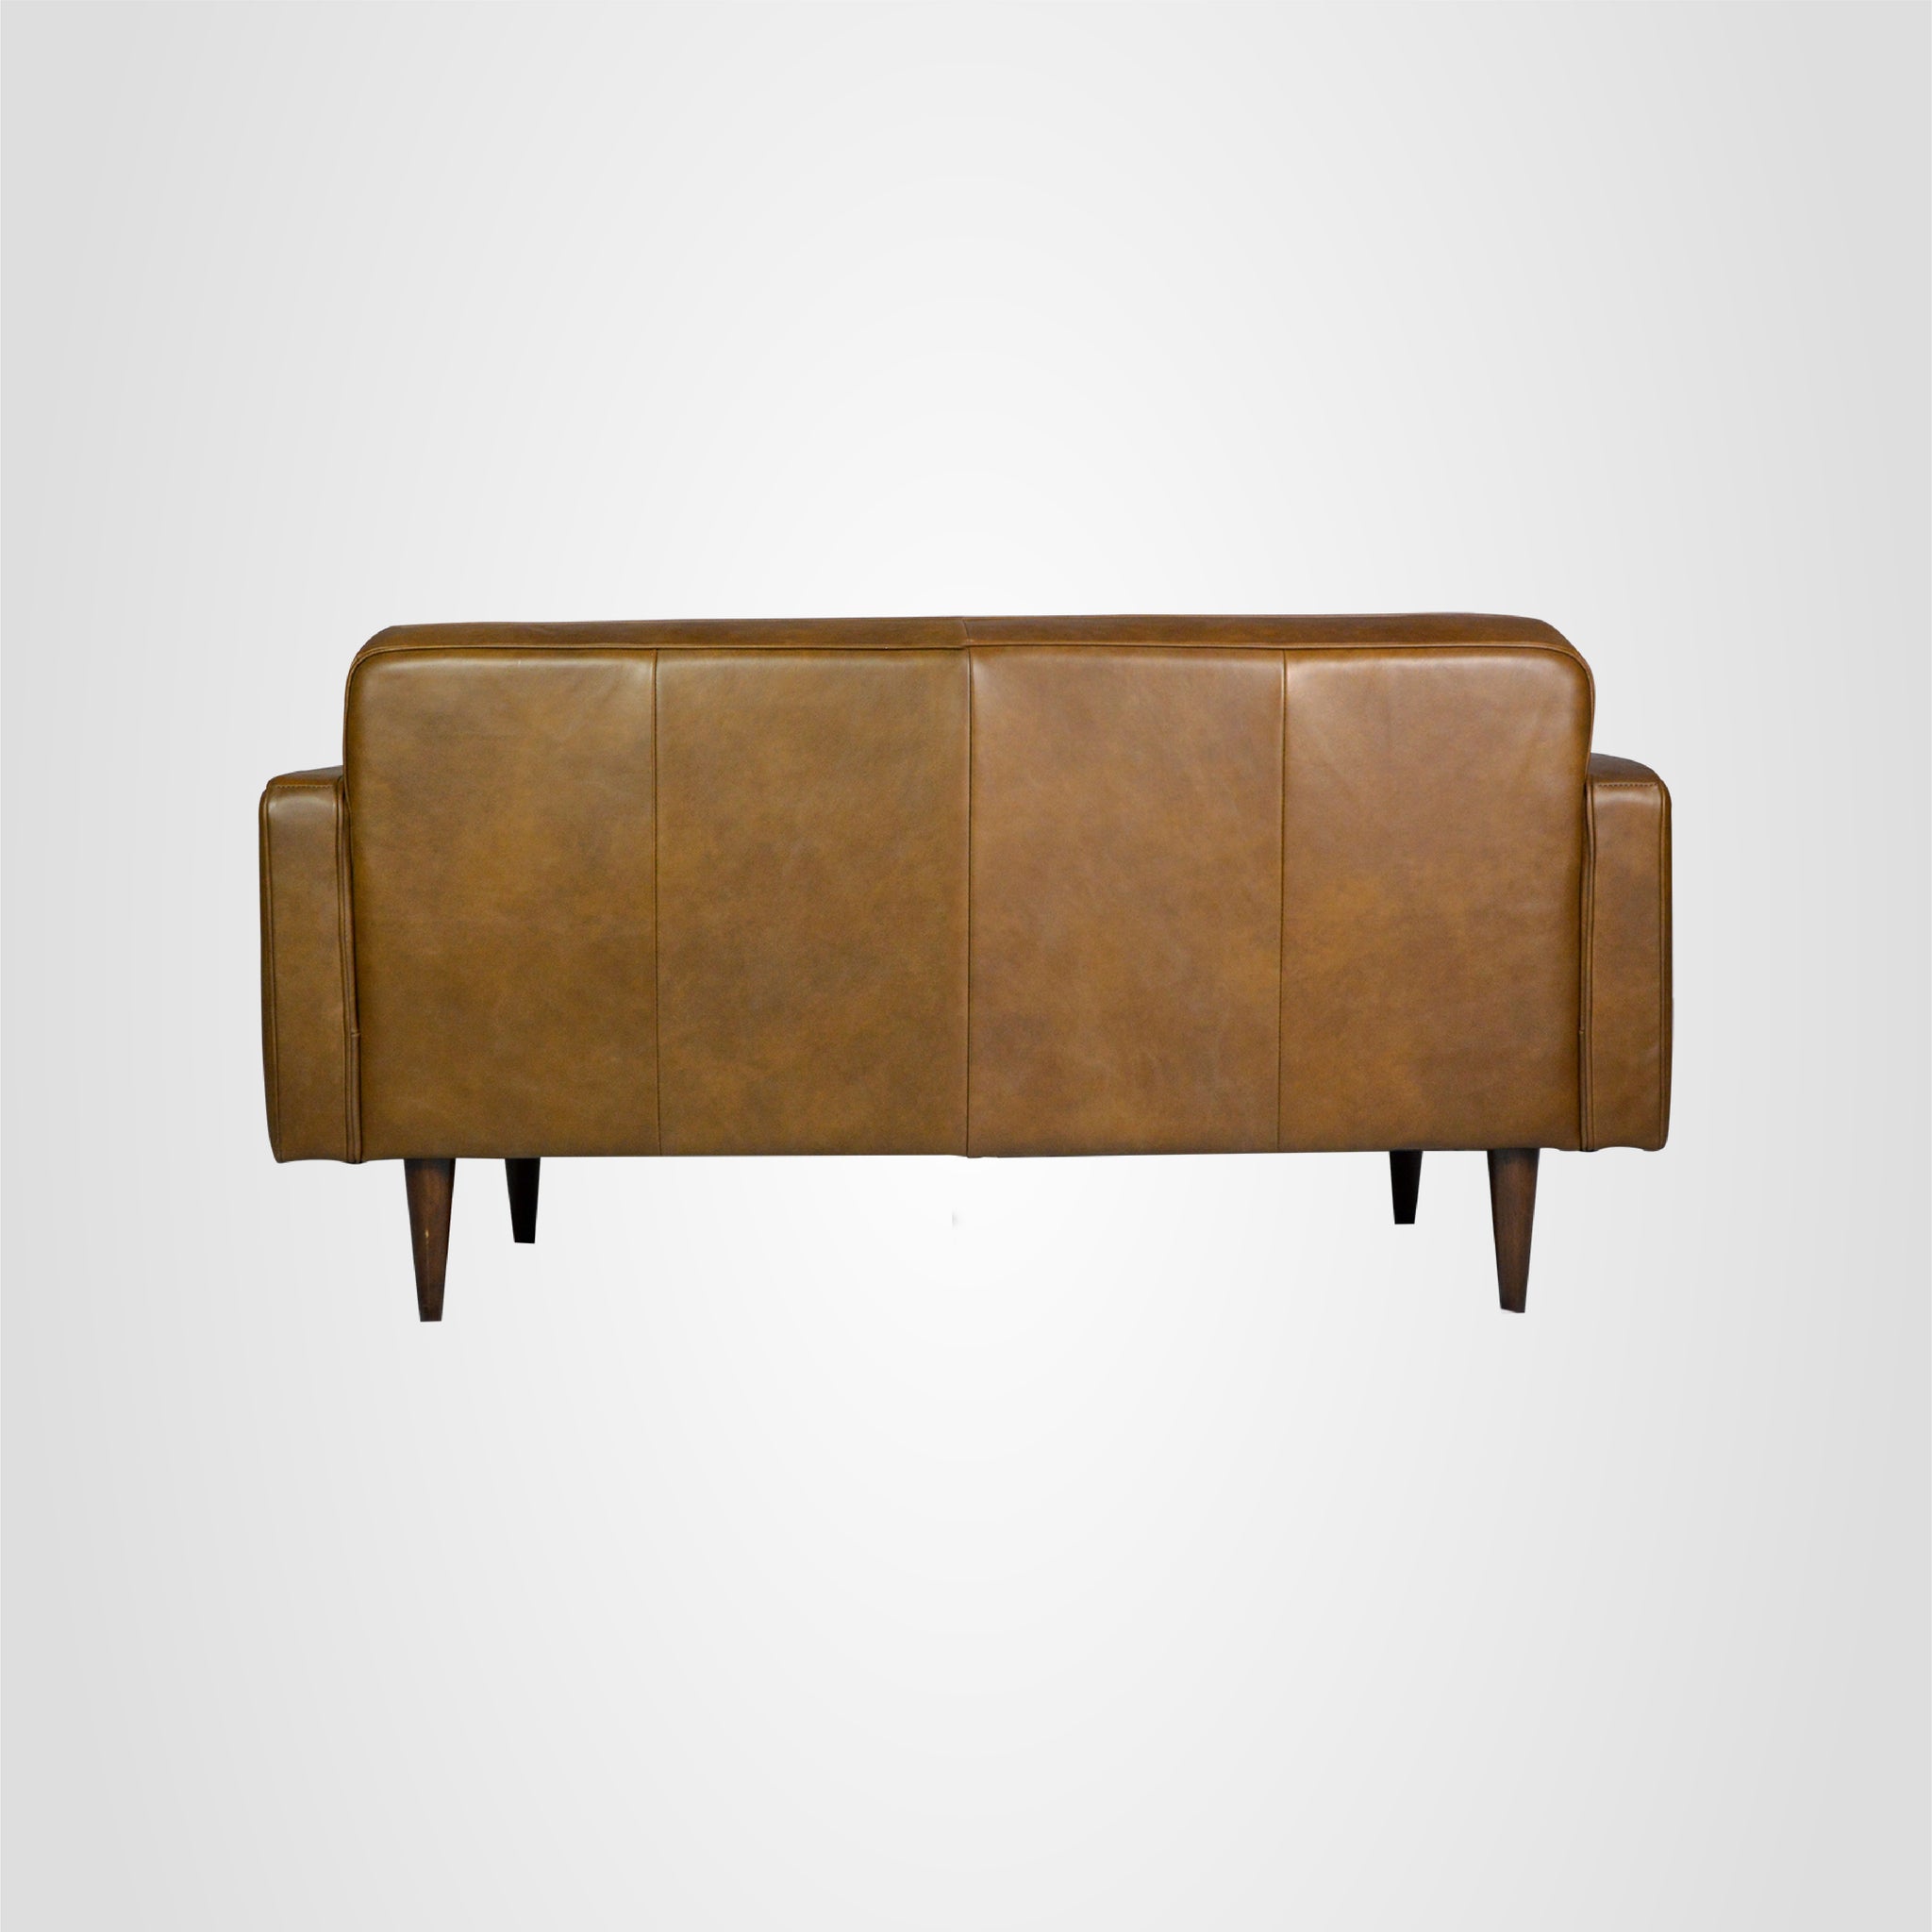 Evana 2 Seater Sofa, Leather